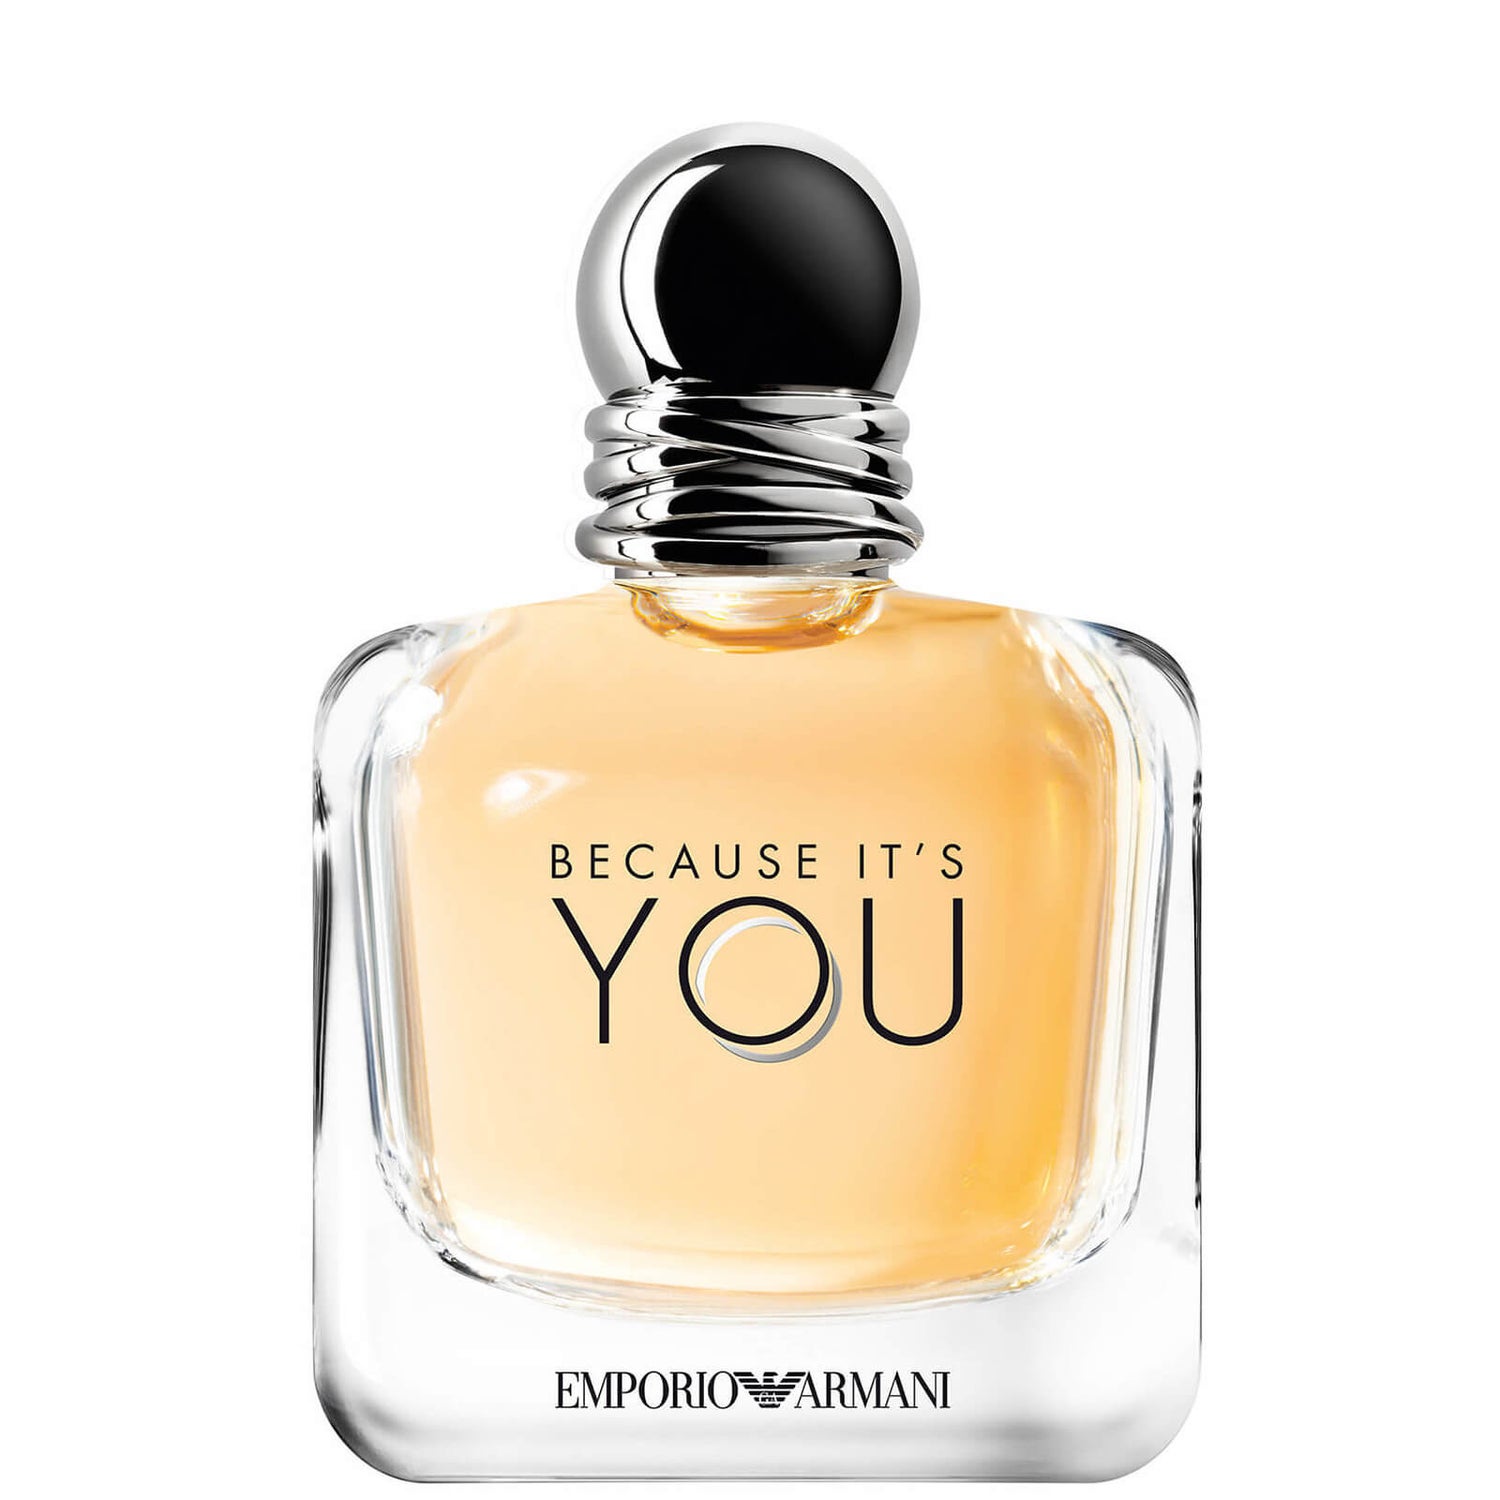 Emporio Armani Because It's You Eau de Parfum 100 ml